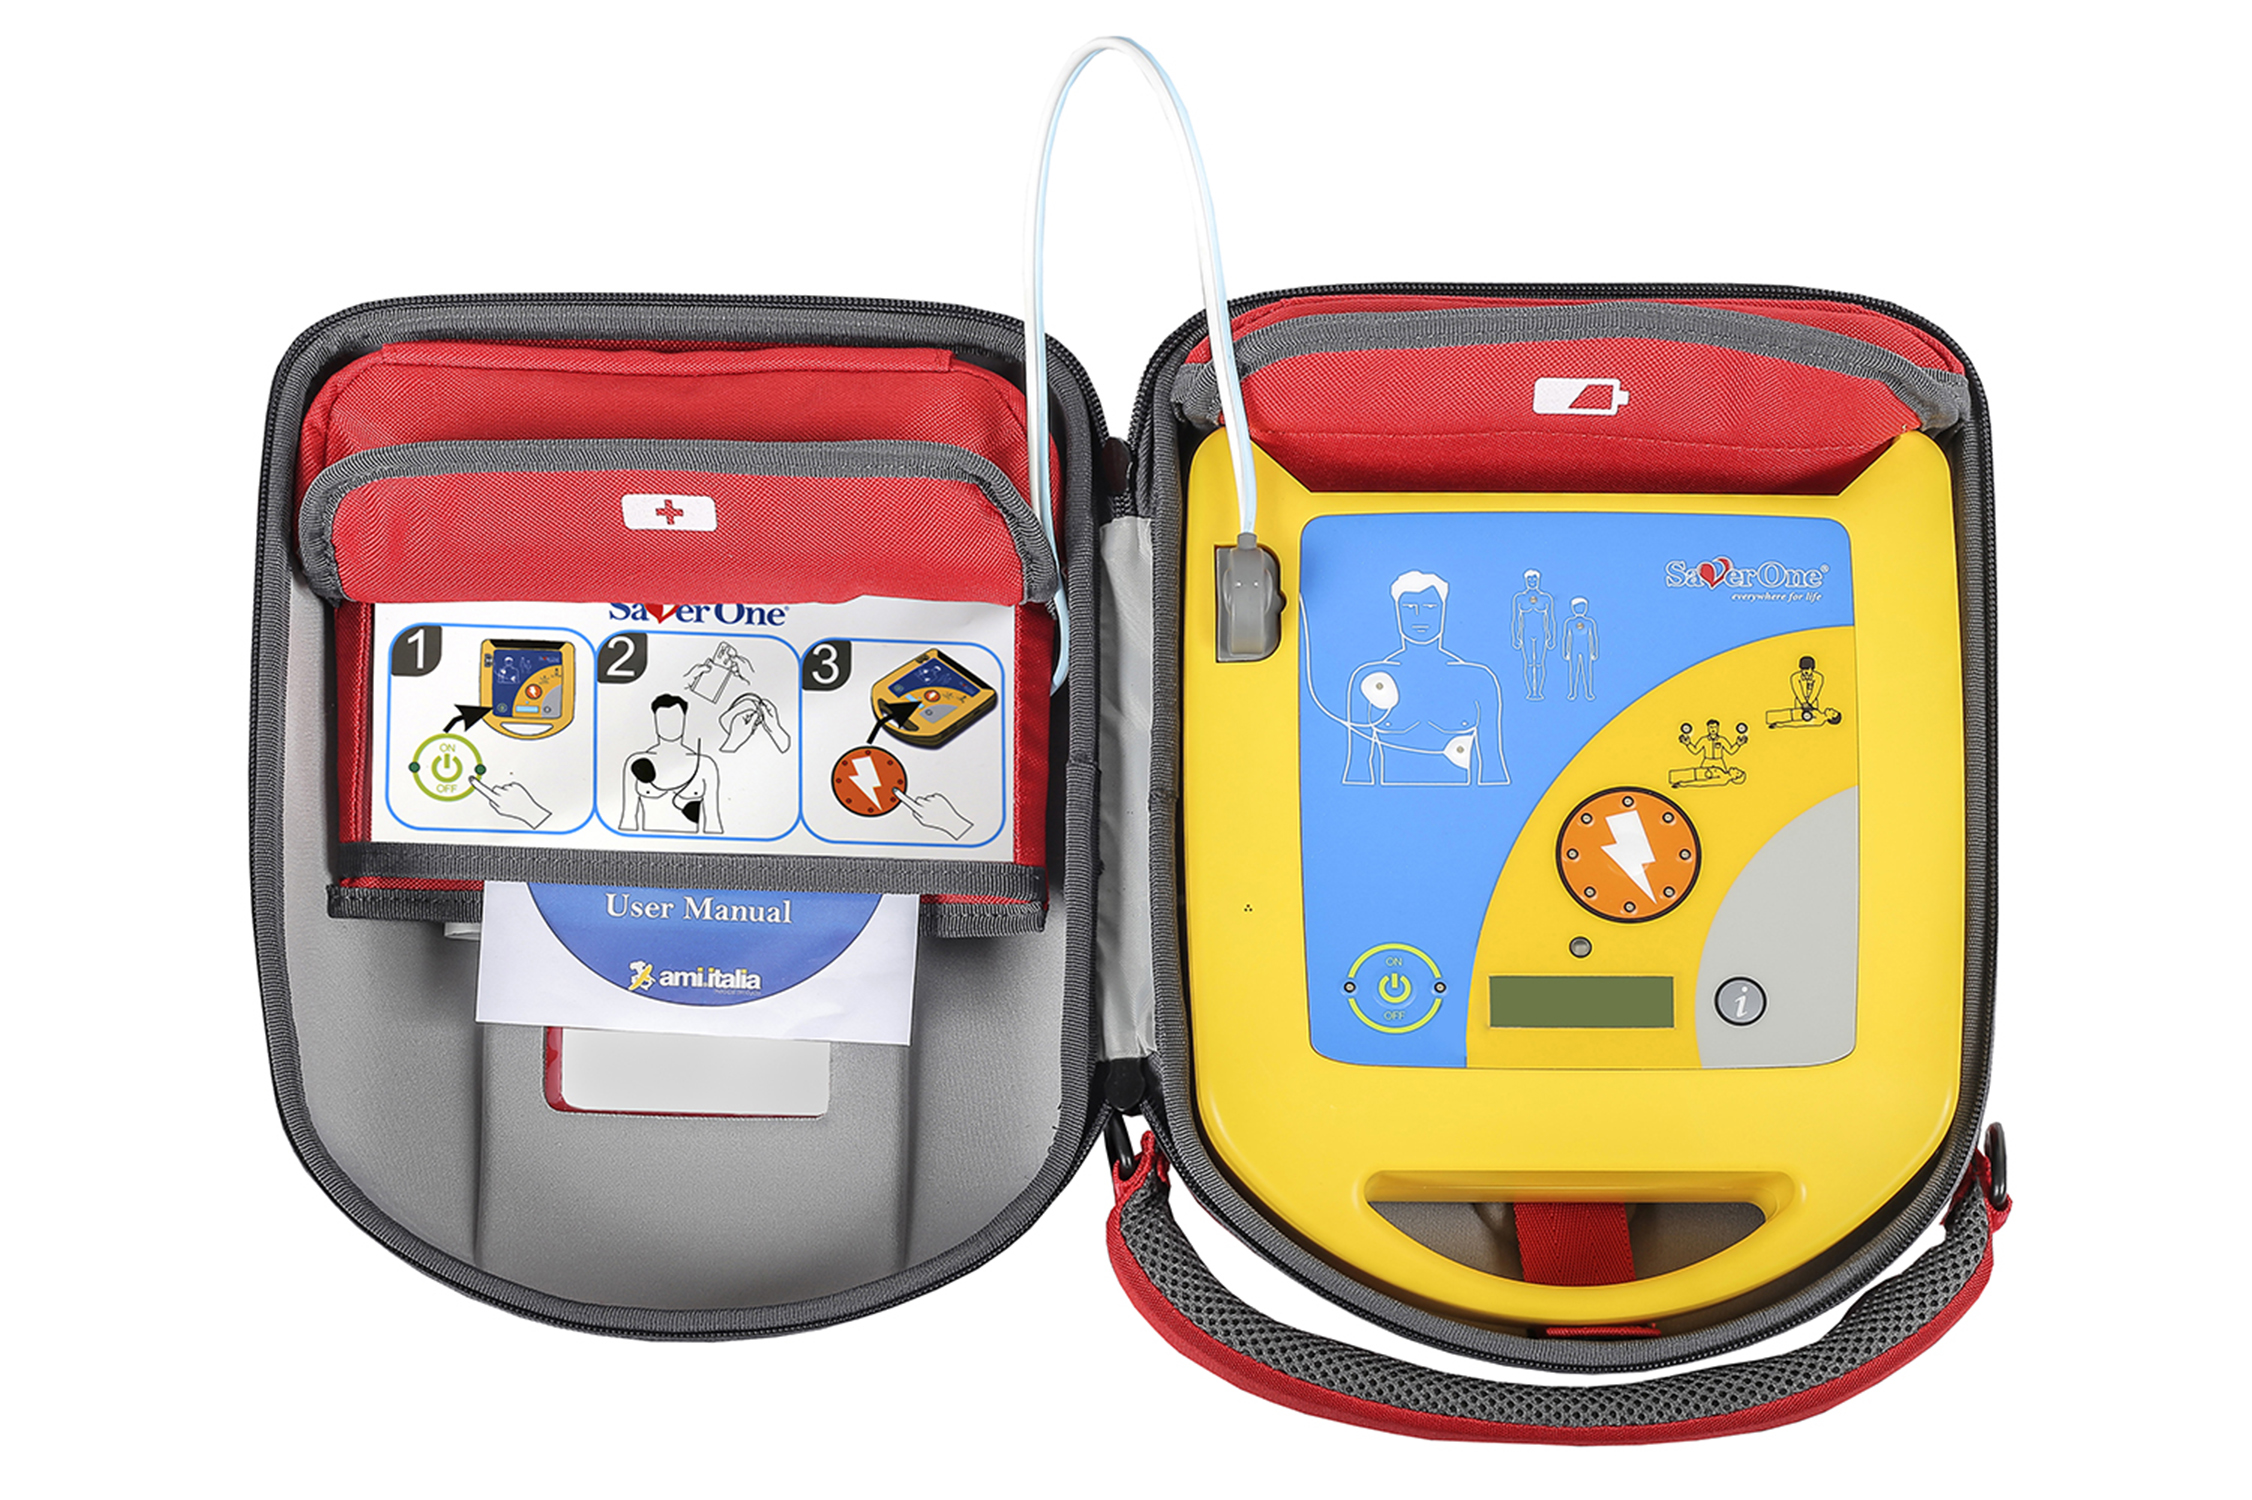 Saver One AED Defibrillator / Vollautomat